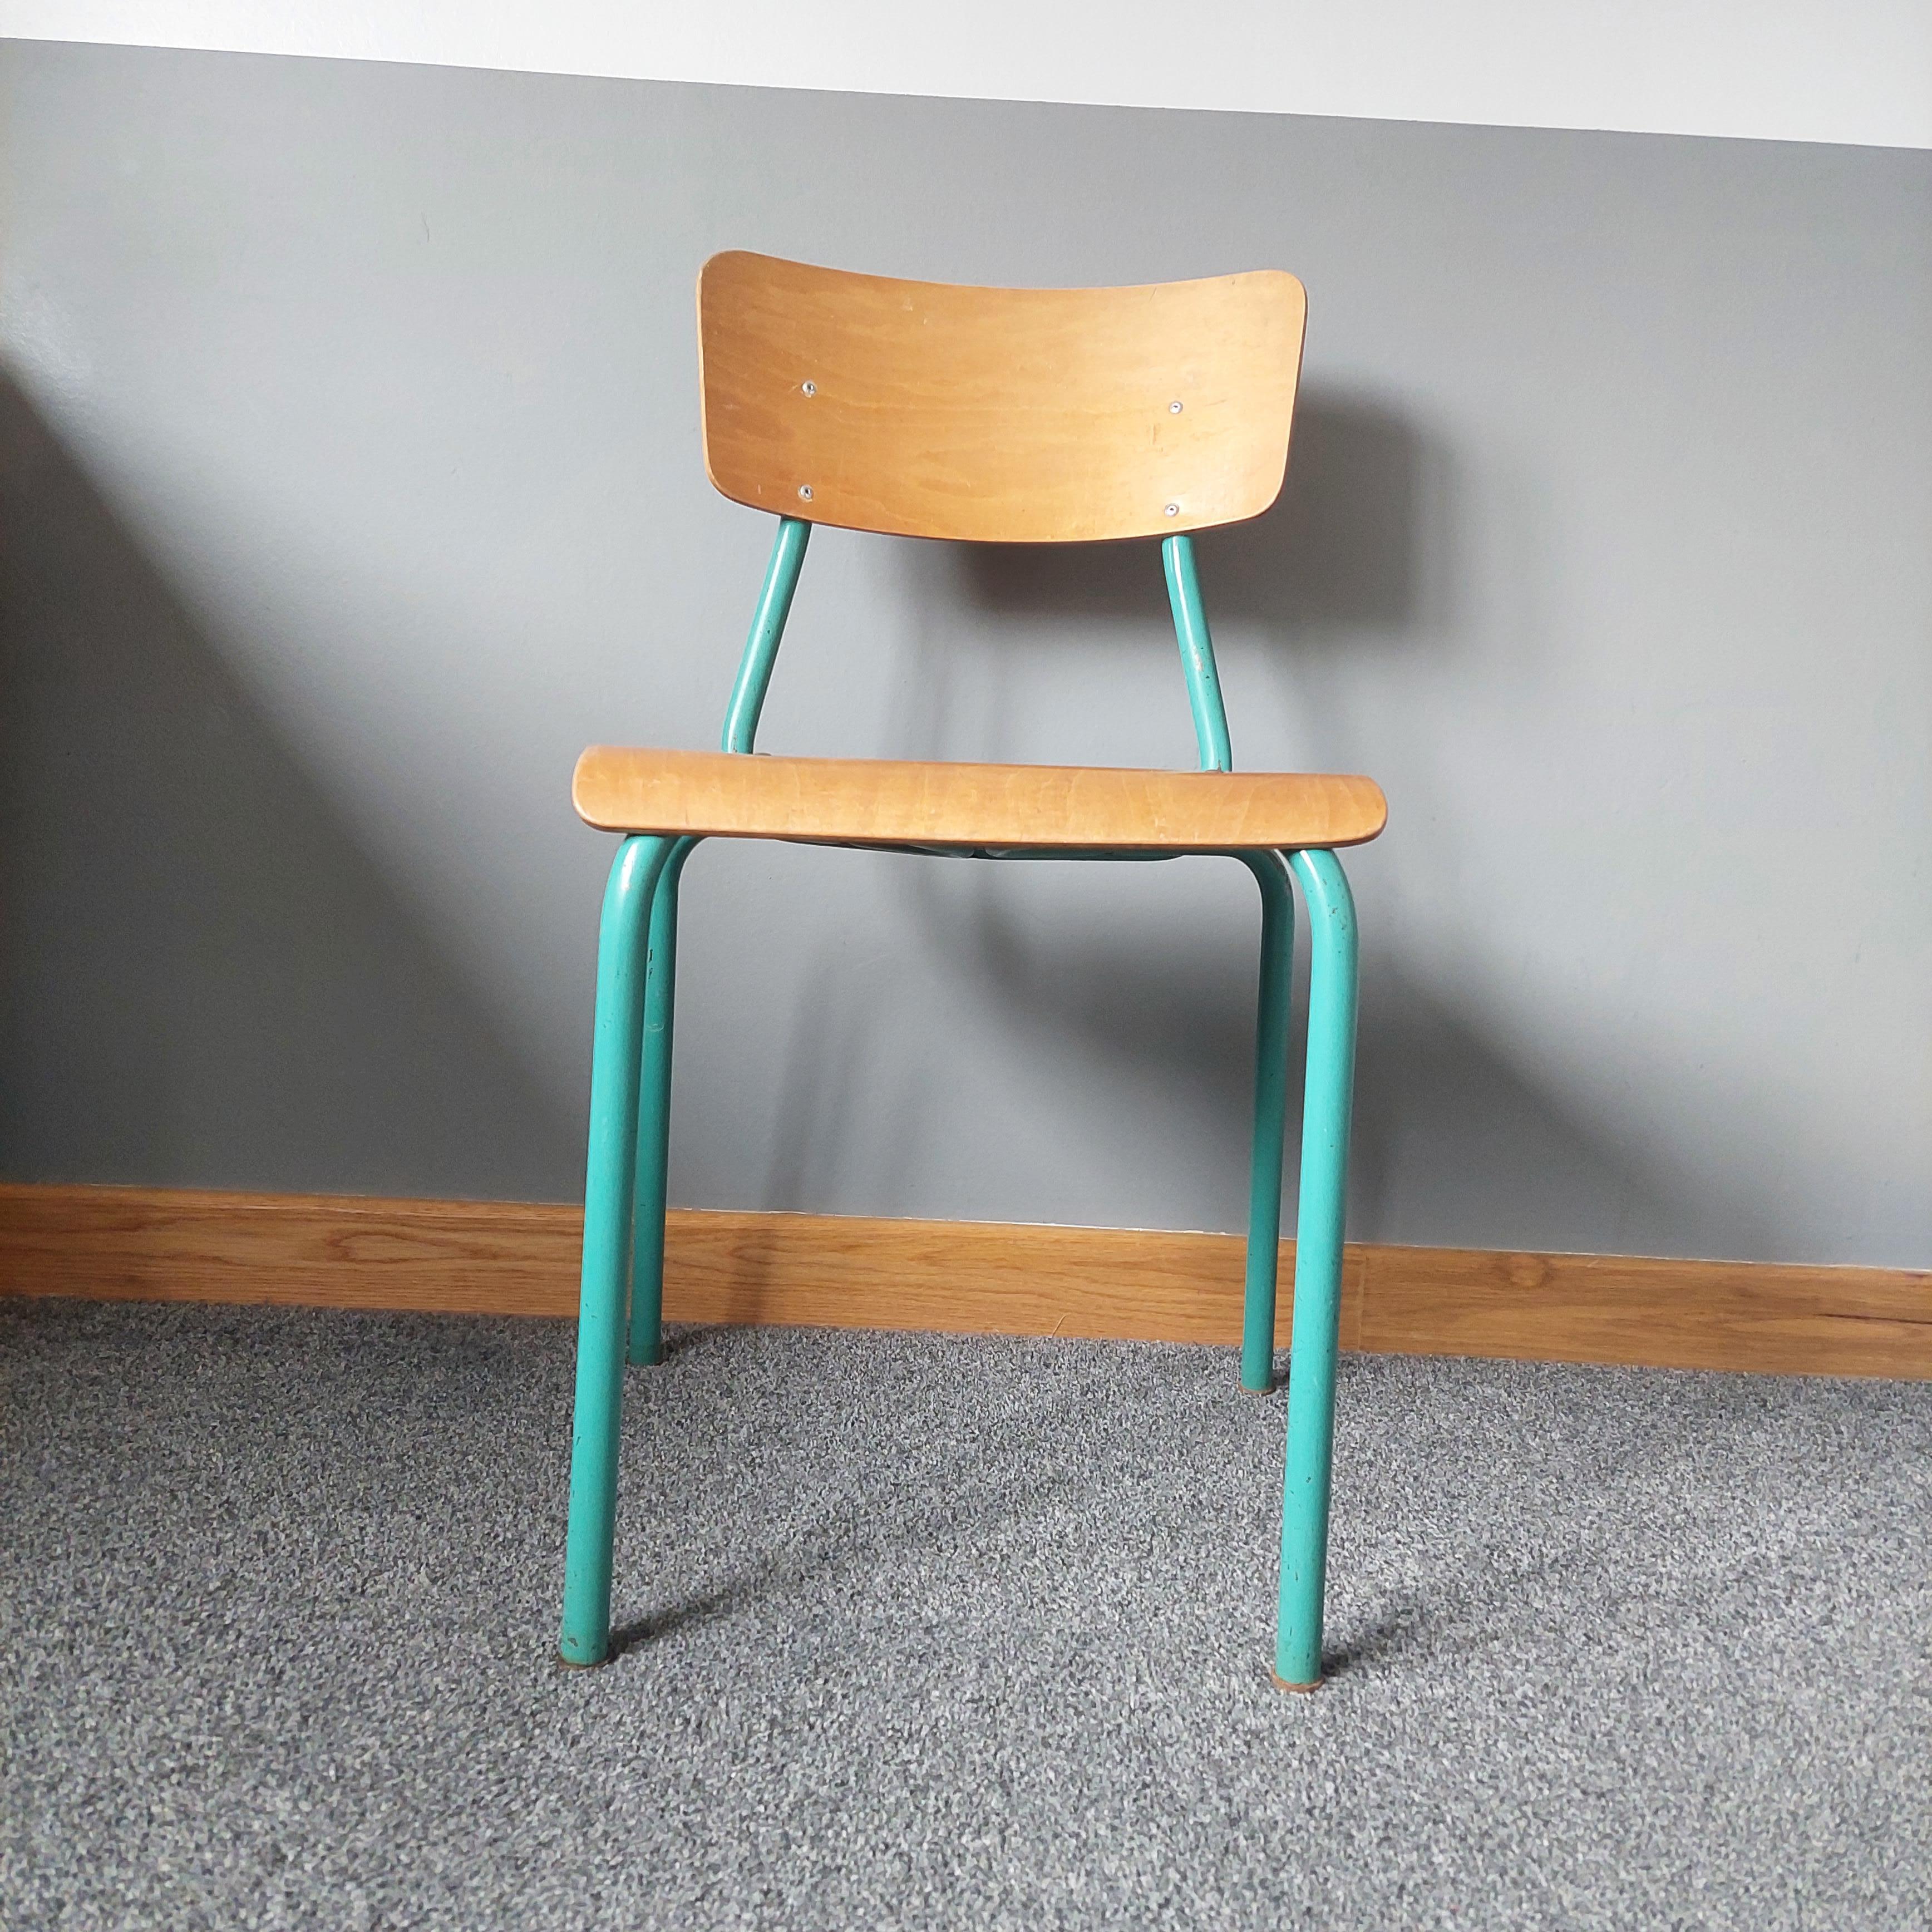 European Midcentury 50s Industrial School Adult Size Chair Metal and Plywood Vintage Ret